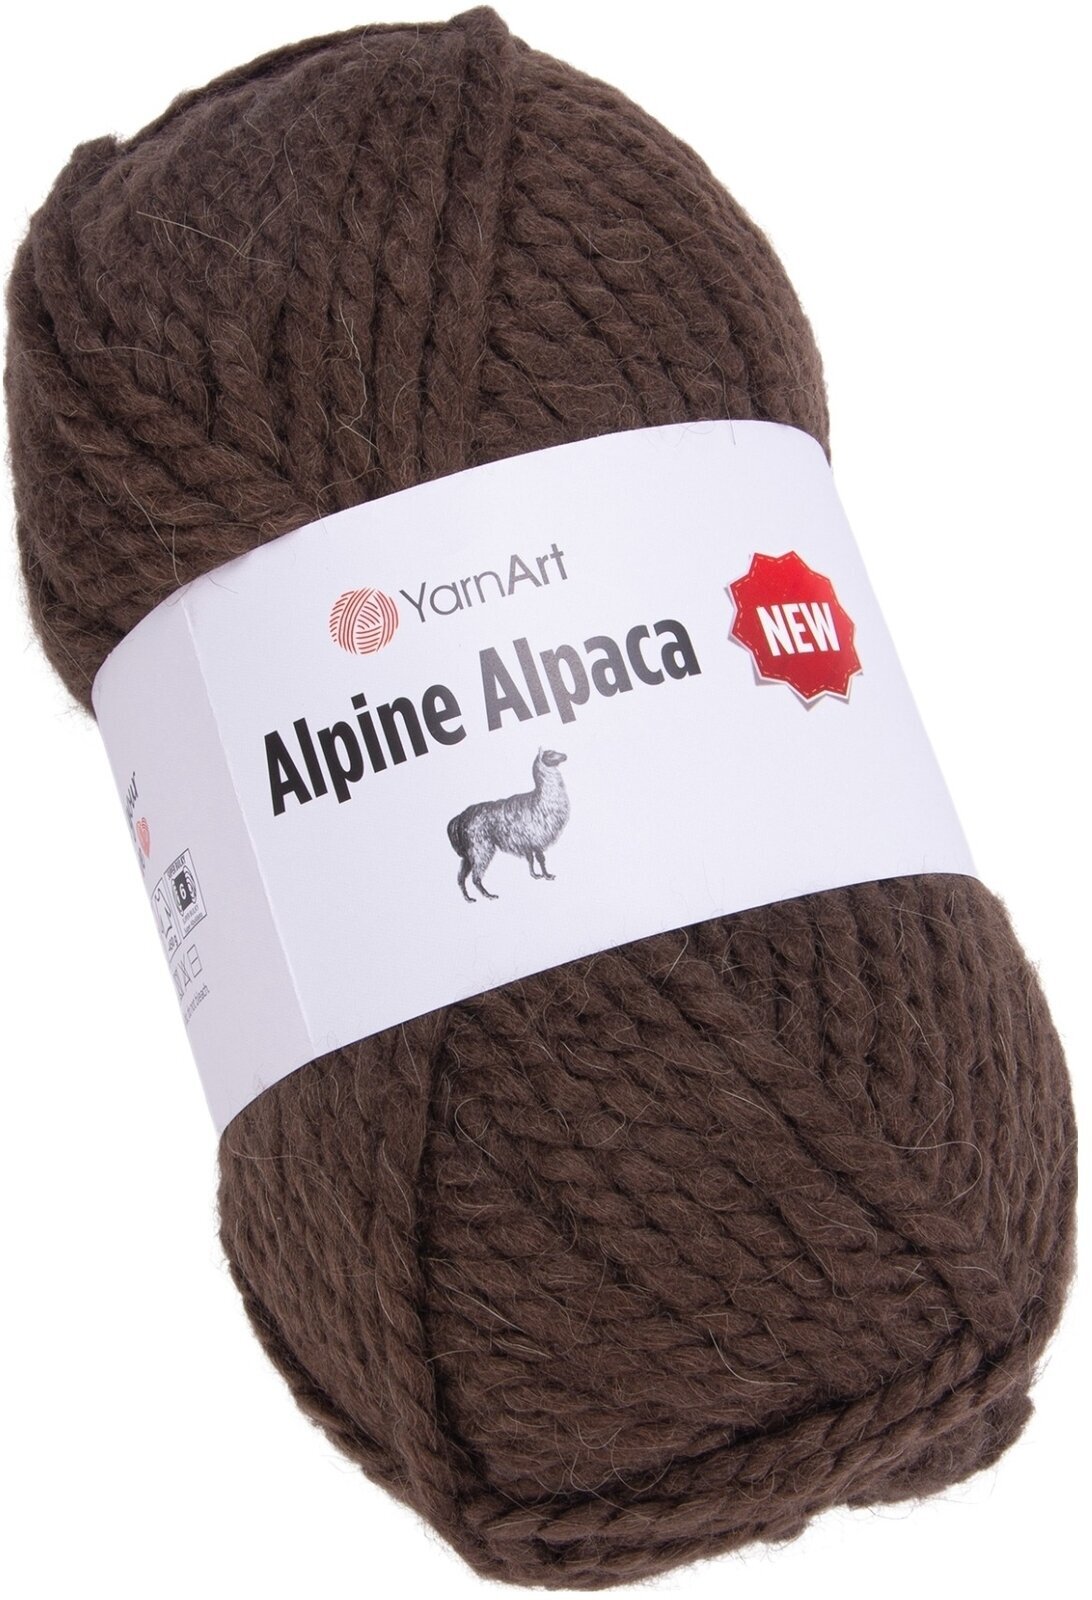 Knitting Yarn Yarn Art Alpine Alpaca 1431